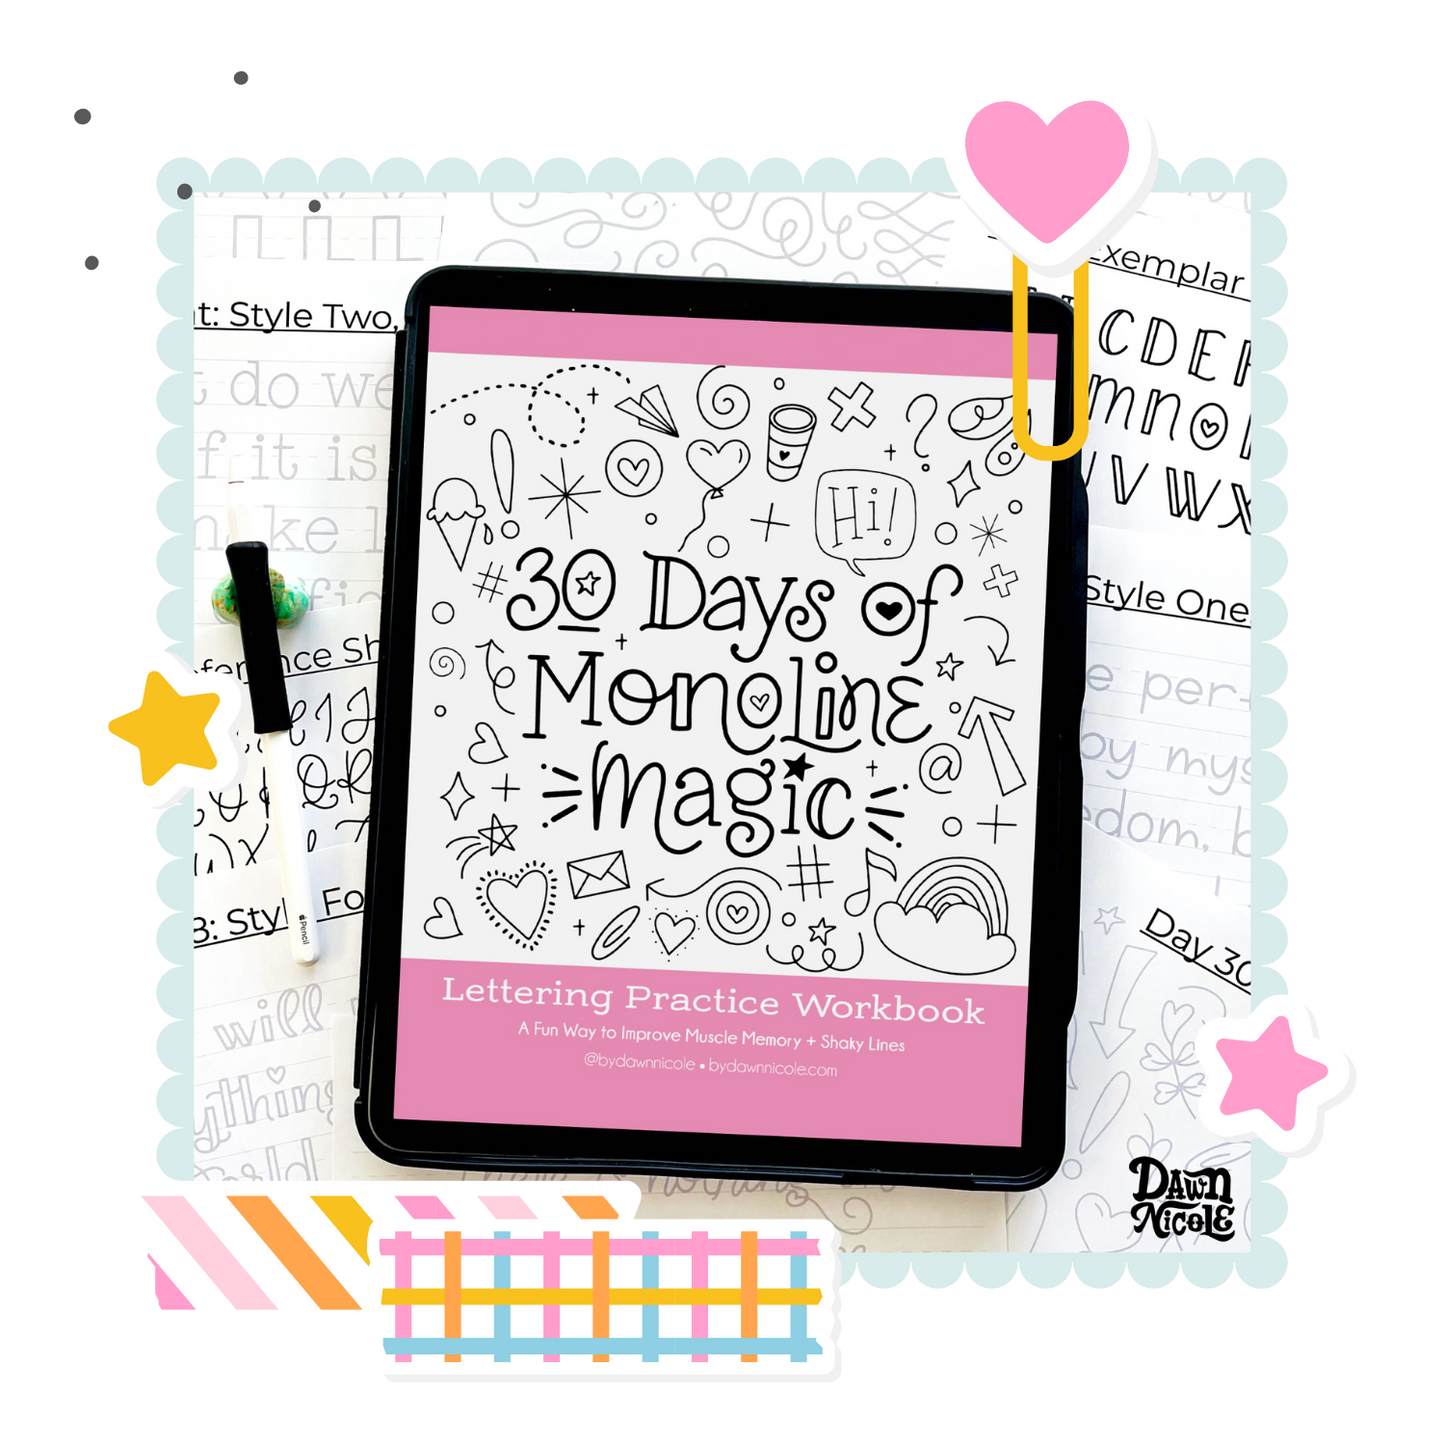 30 Days of Monoline Magic Workbook